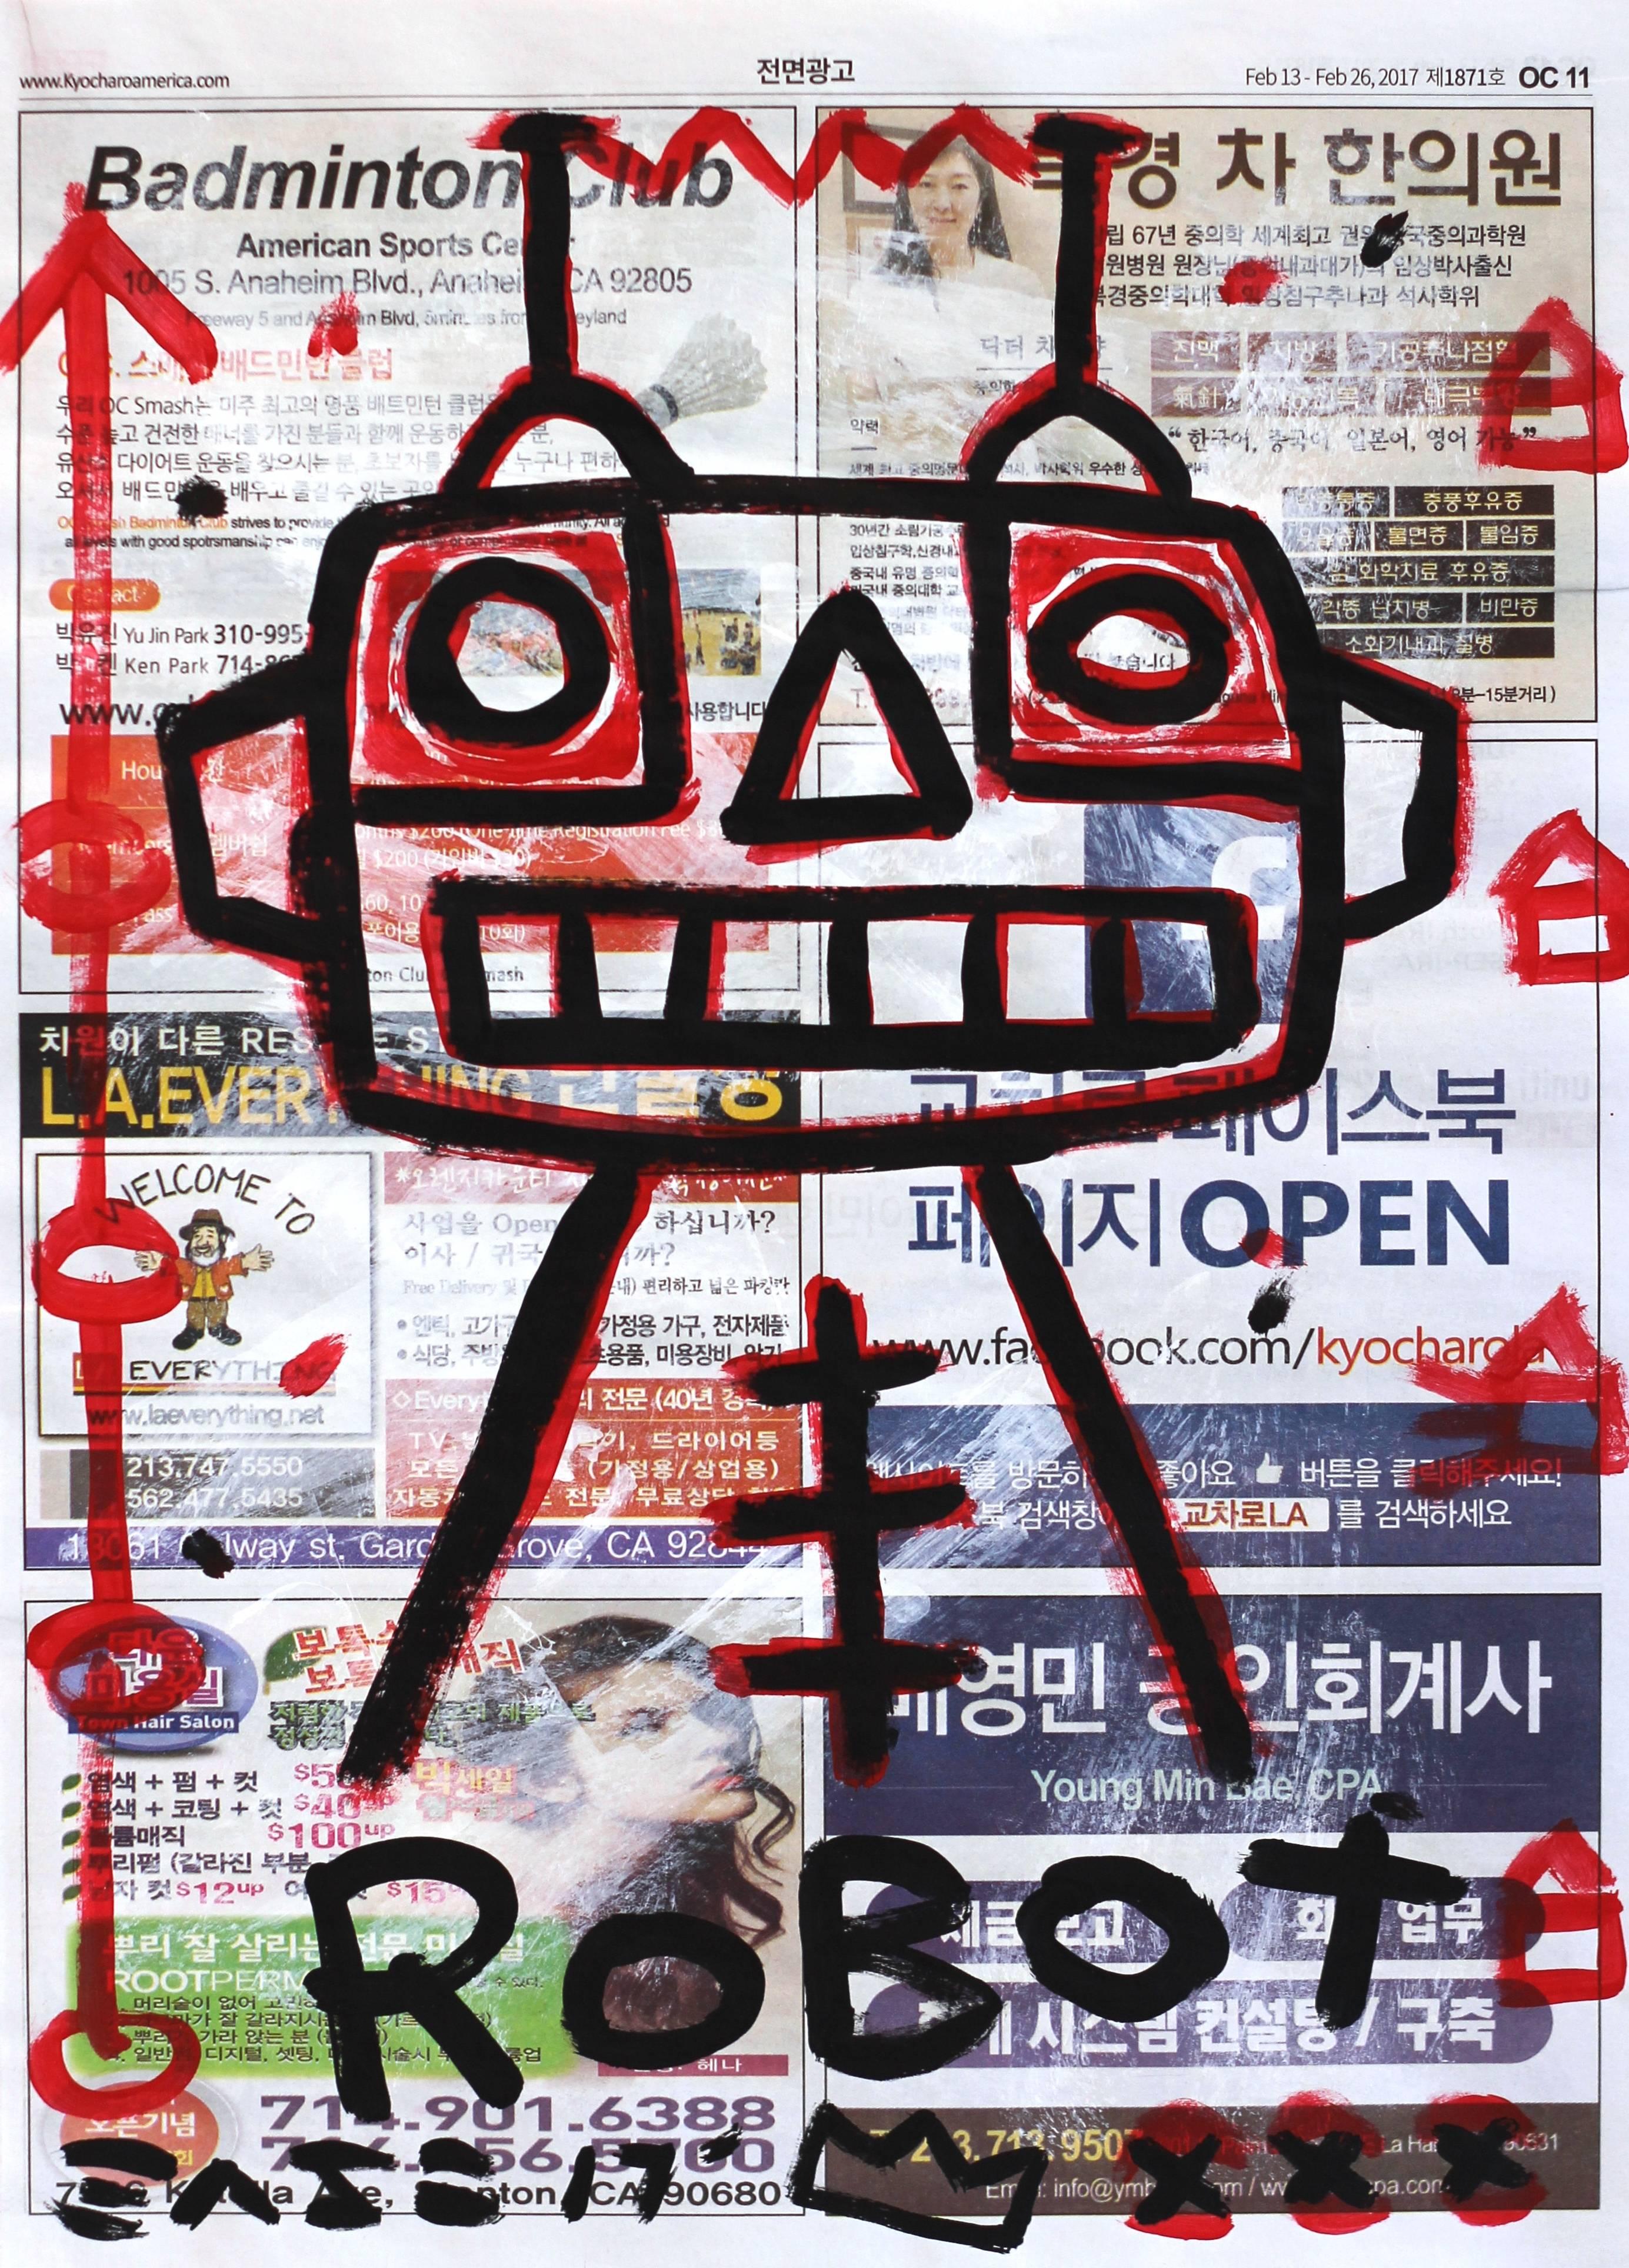 Robot King - Mixed Media Art by Gary John